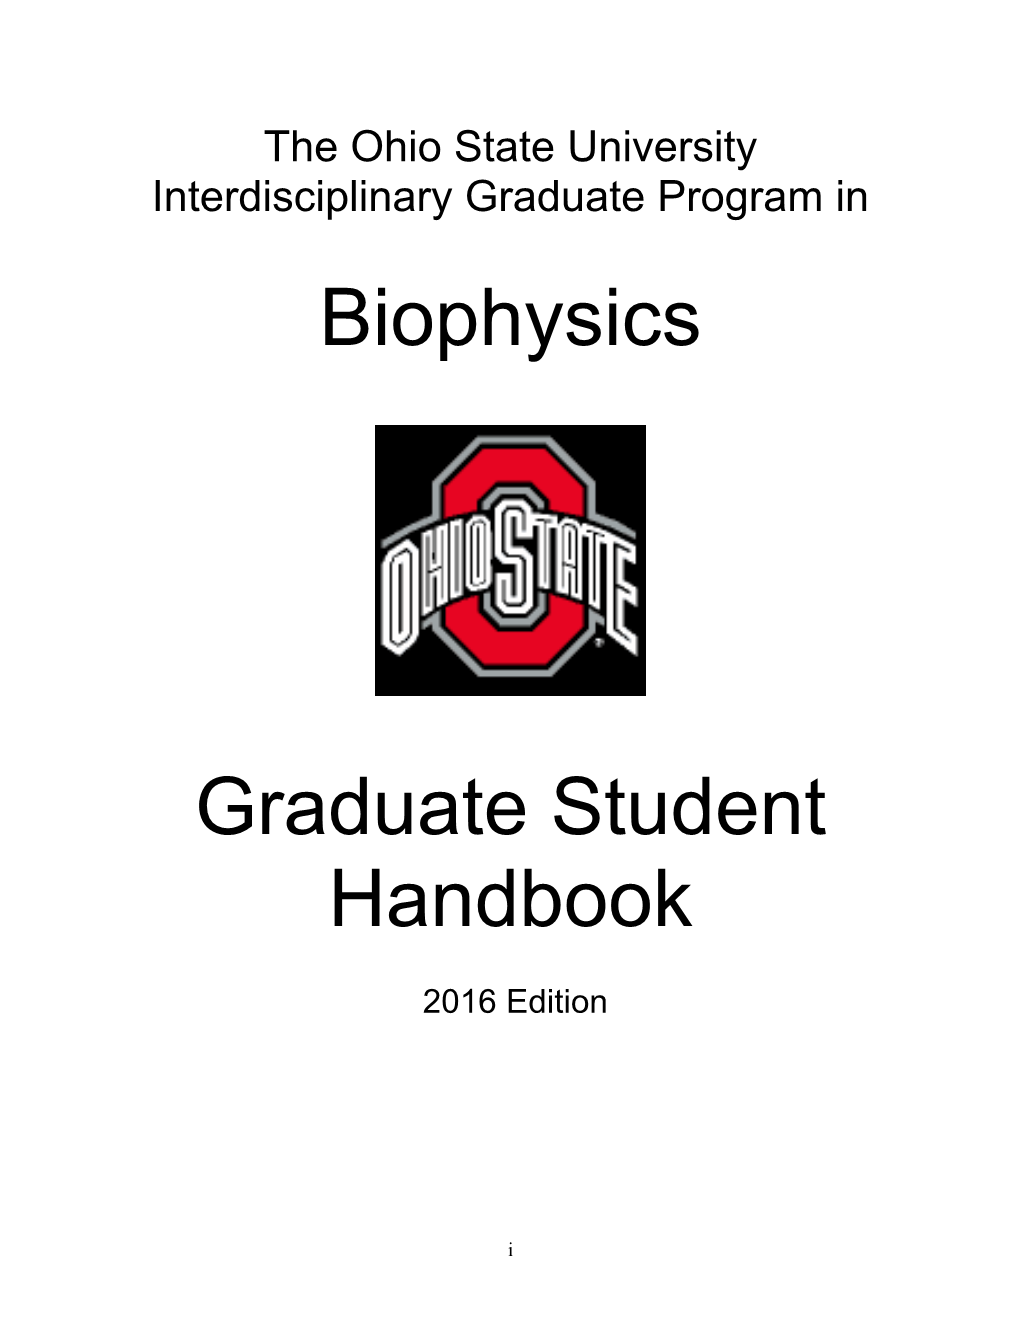 Biophysics Graduate Student Handbook